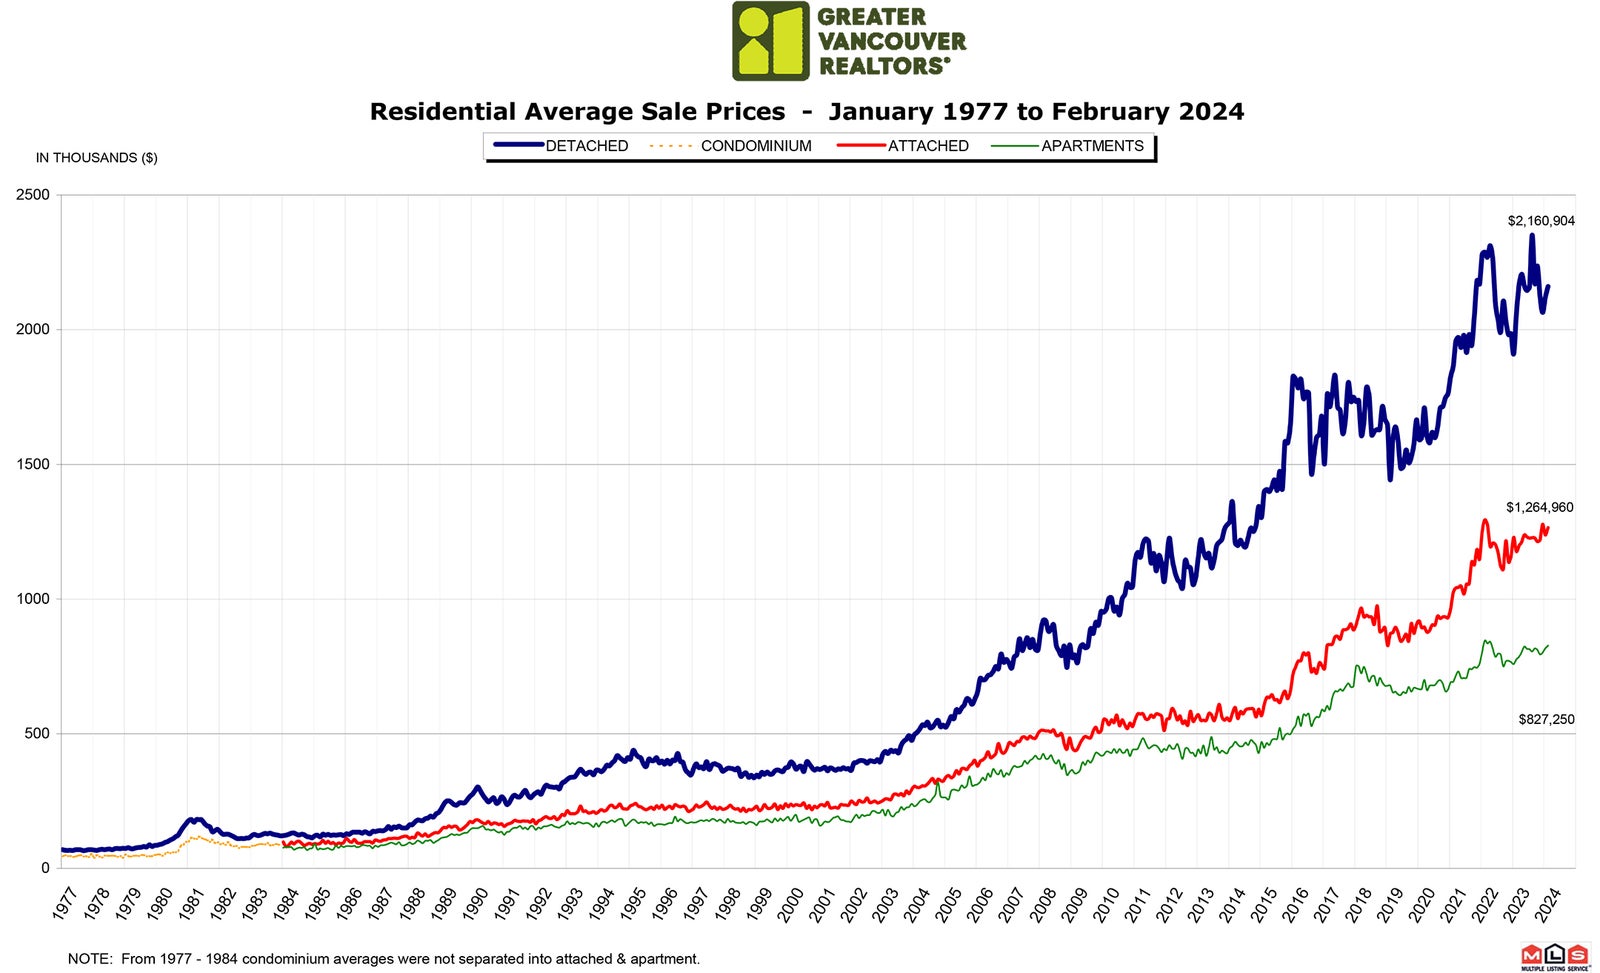 Residential Average Sale Price RASP February 2024 Vancouver Real Estate Chris Frederickson